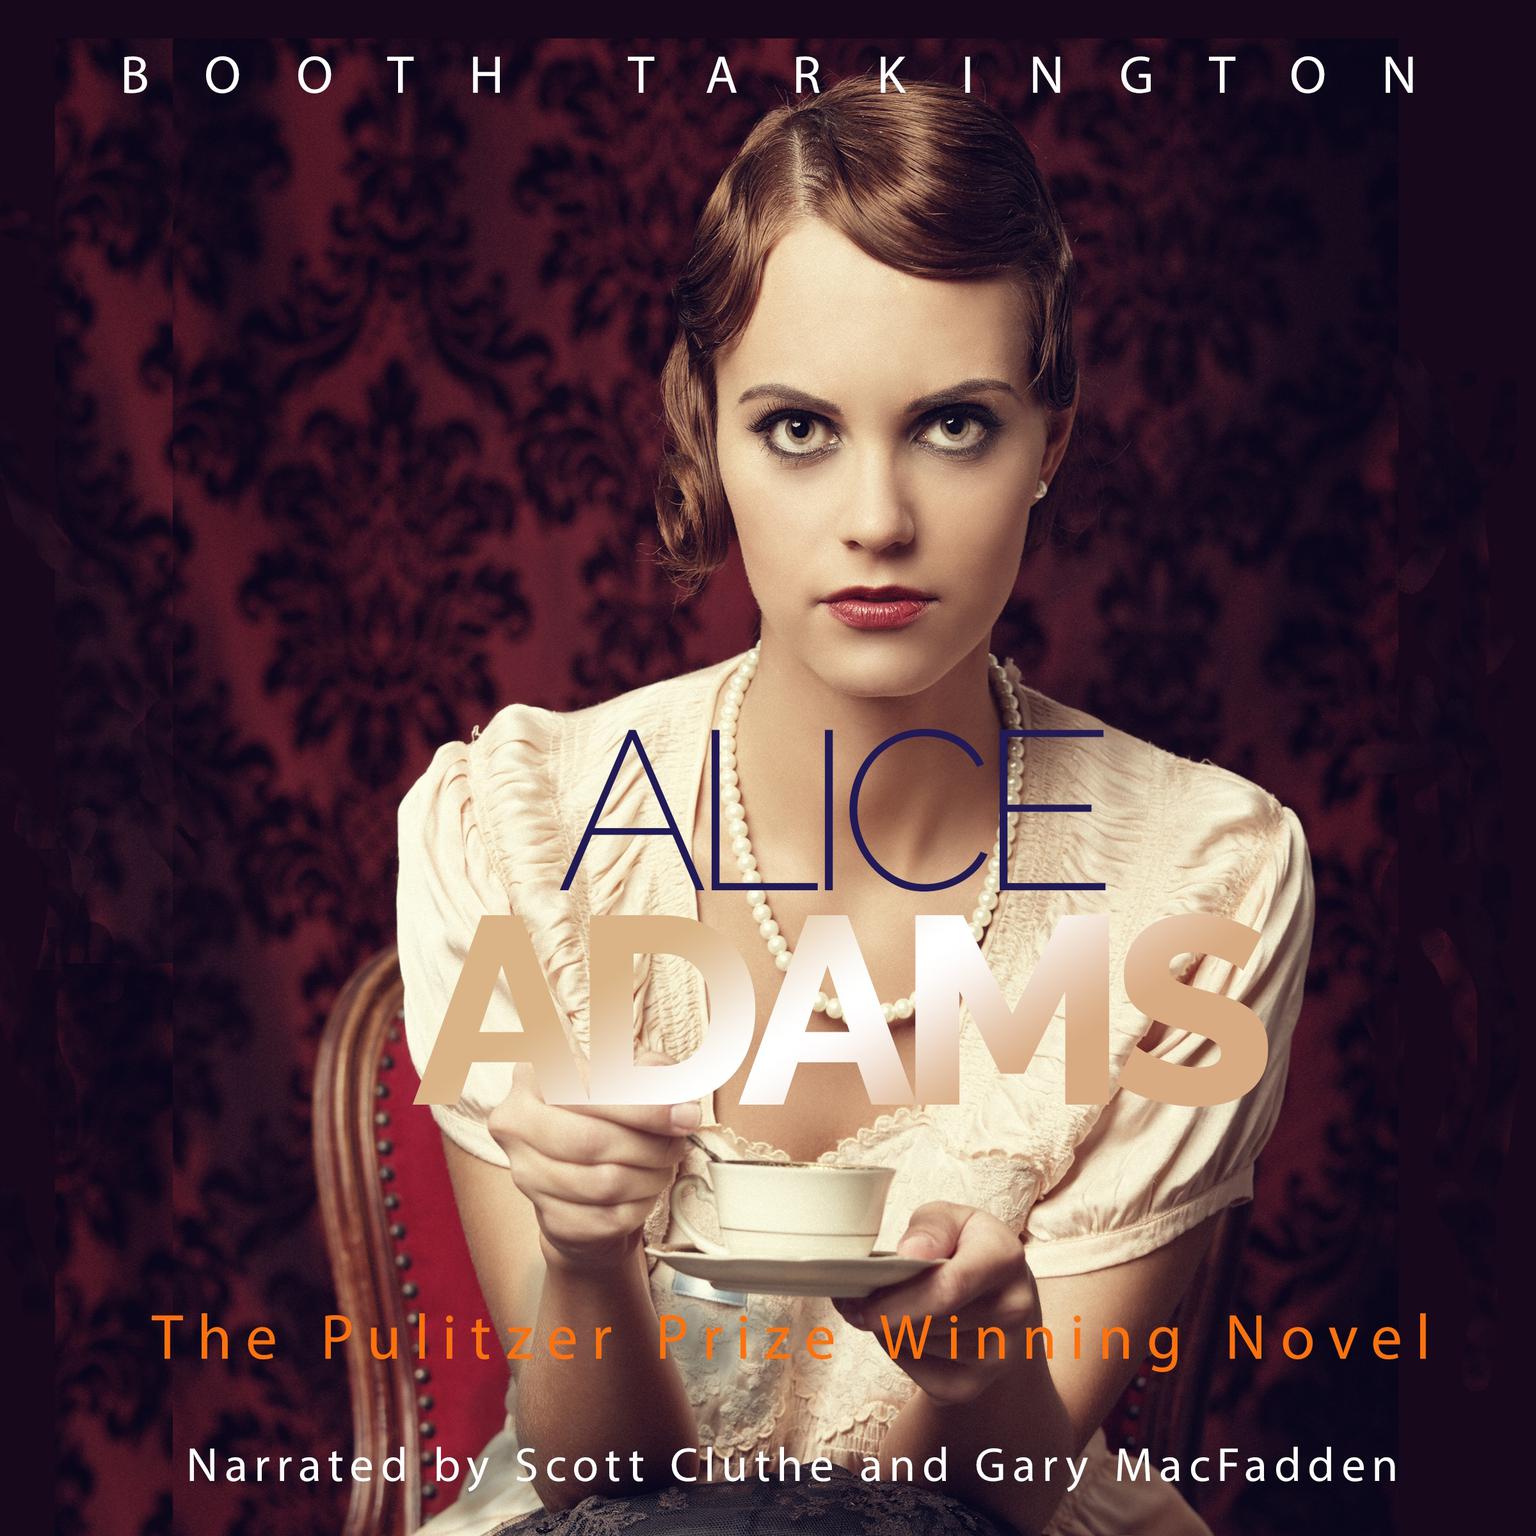 Alice Adams Audiobook, by Booth Tarkington